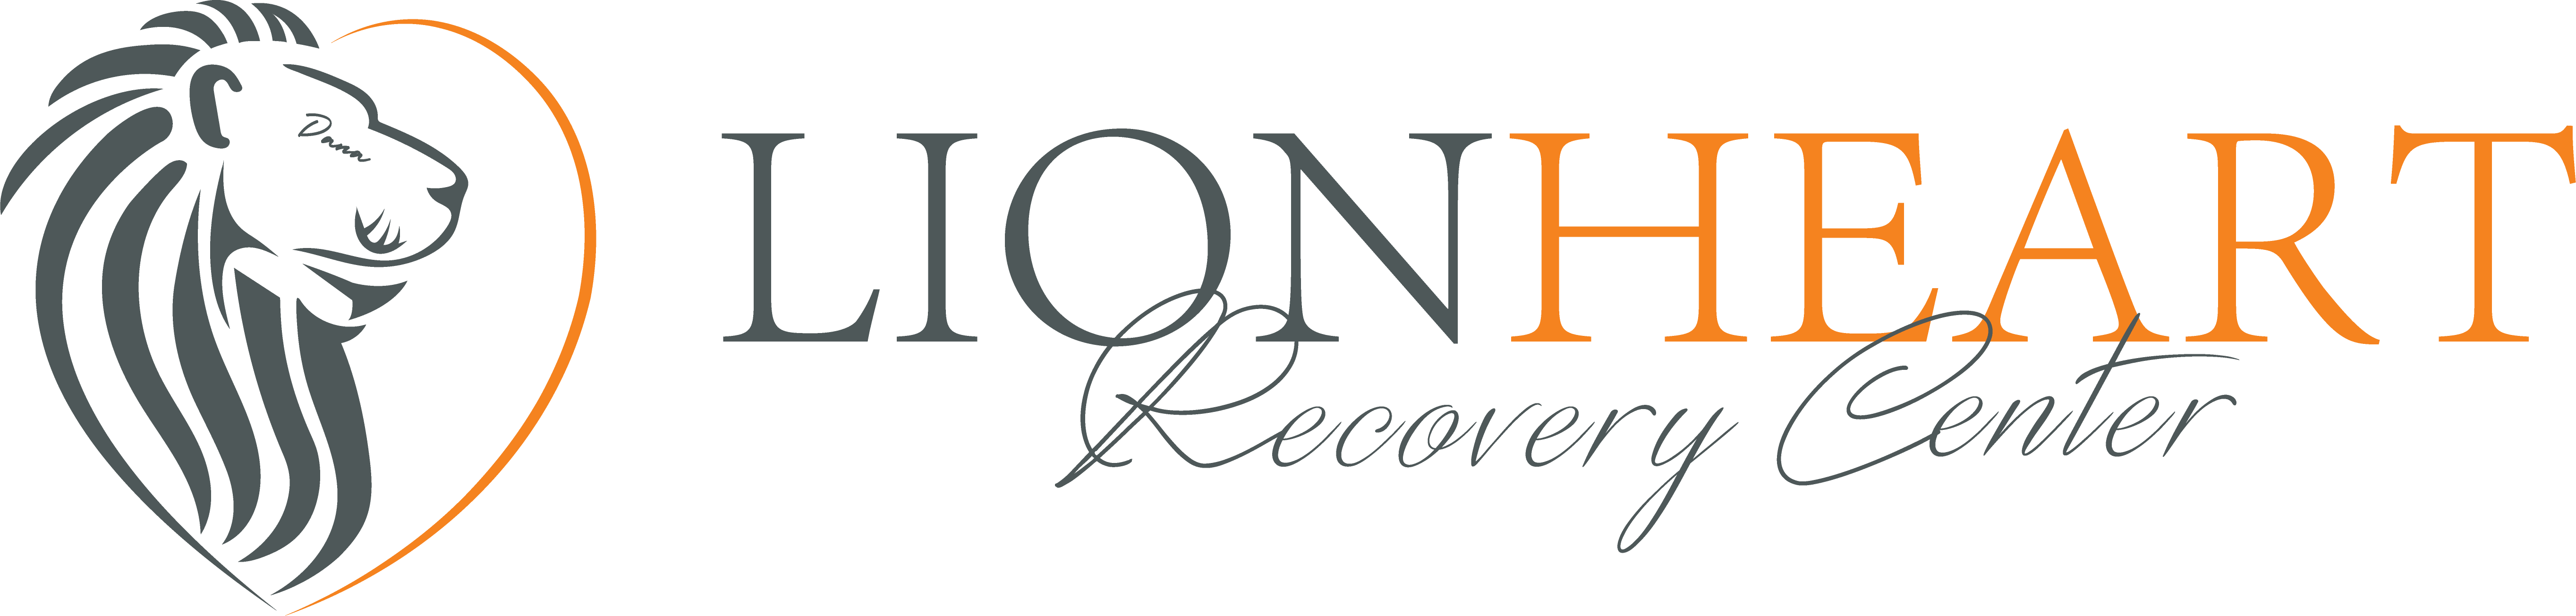 Lionheart Recovery Center